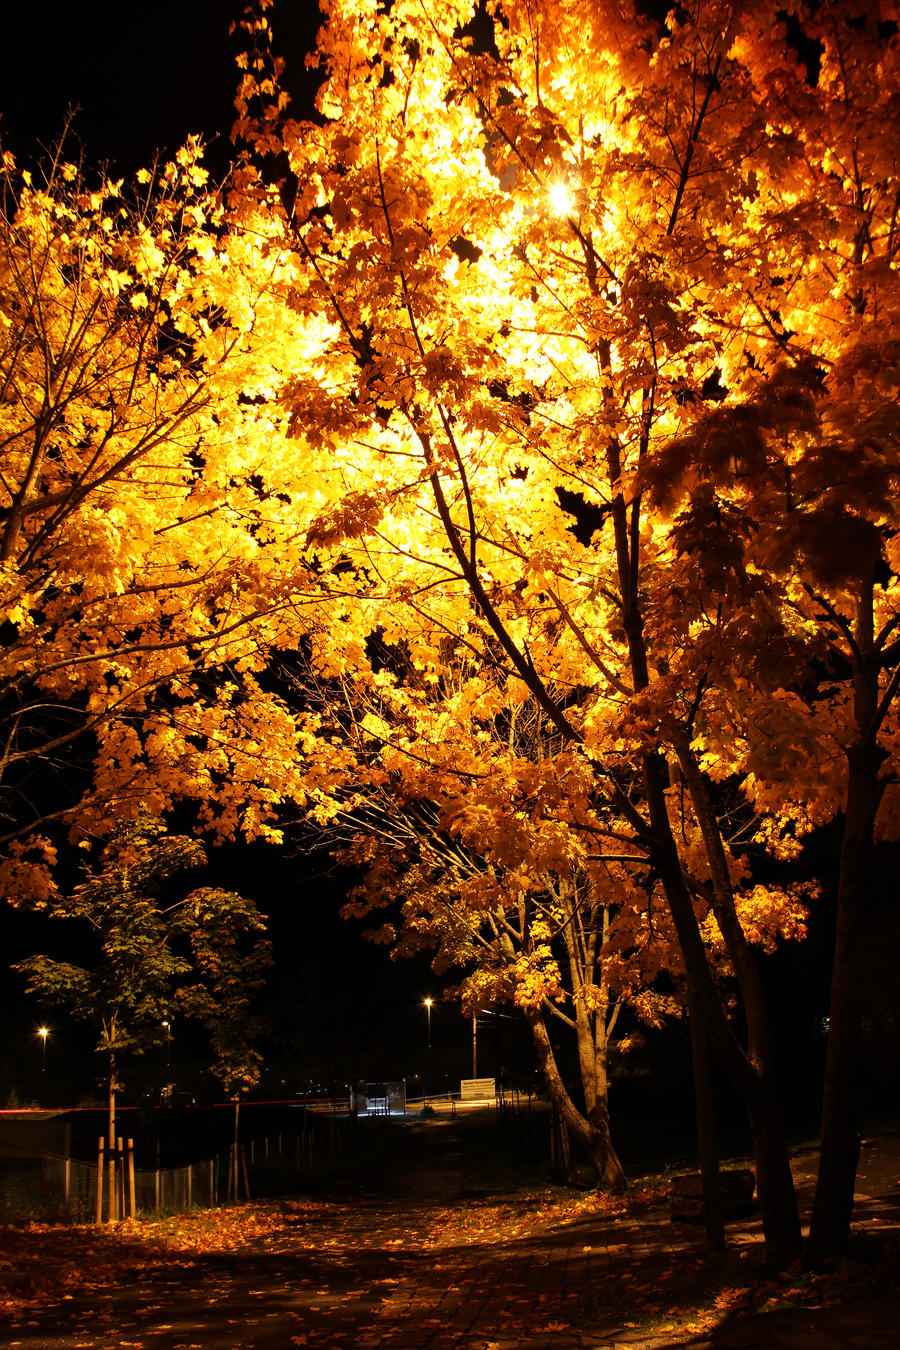 autumn_at_night_by_earudienundomiel-d5gvi1l.jpg